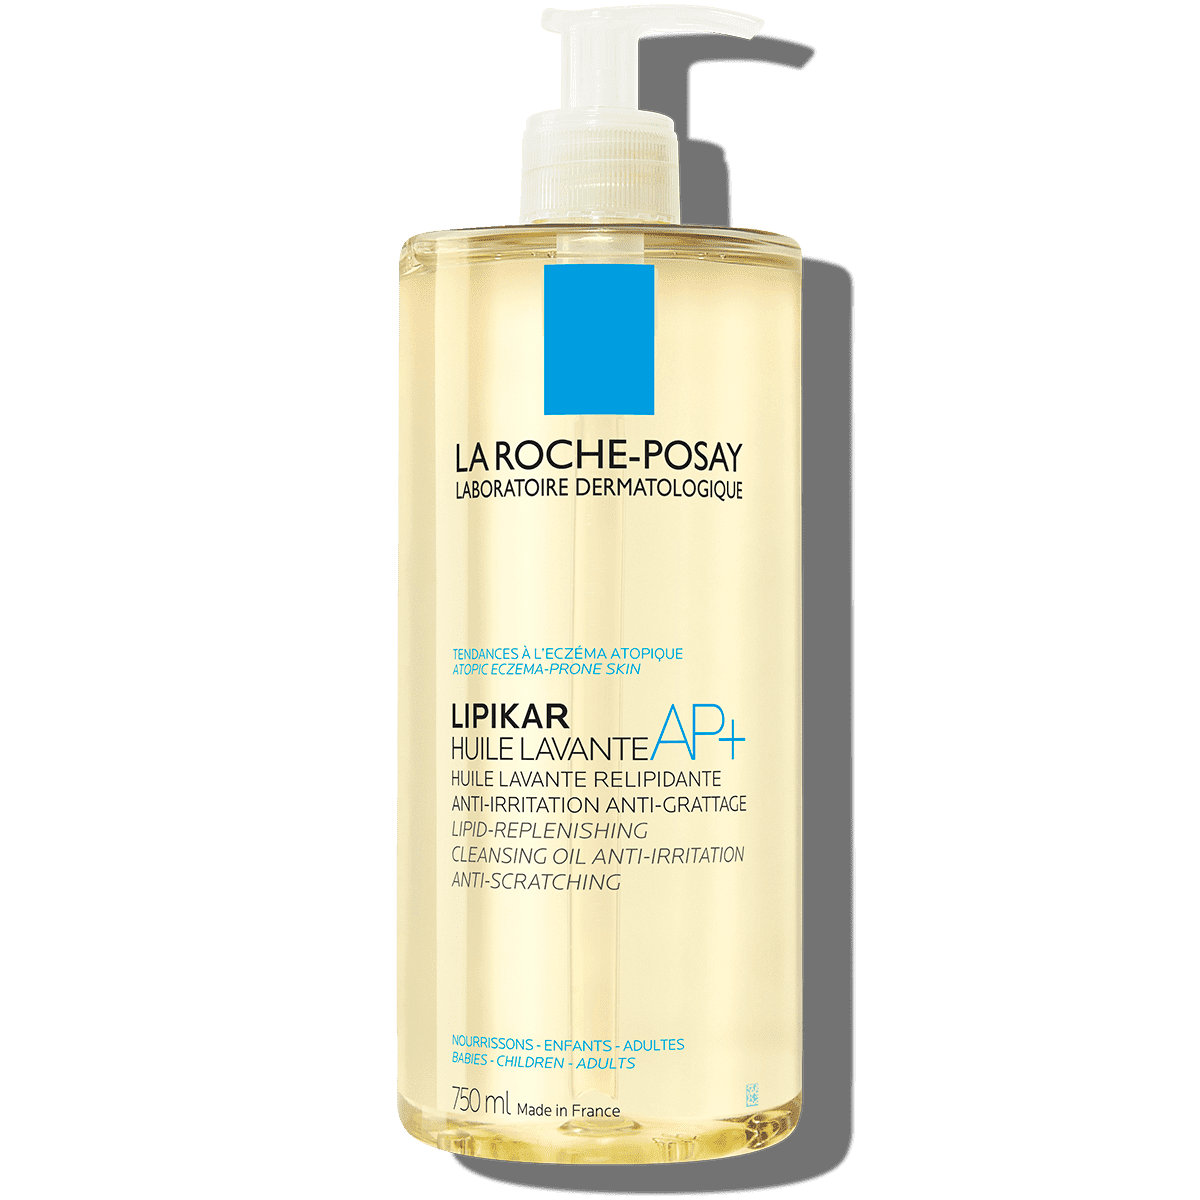 Larocheposay ProductPage Eczema Lipikar Cleansing Oil AP 750ml 3337875